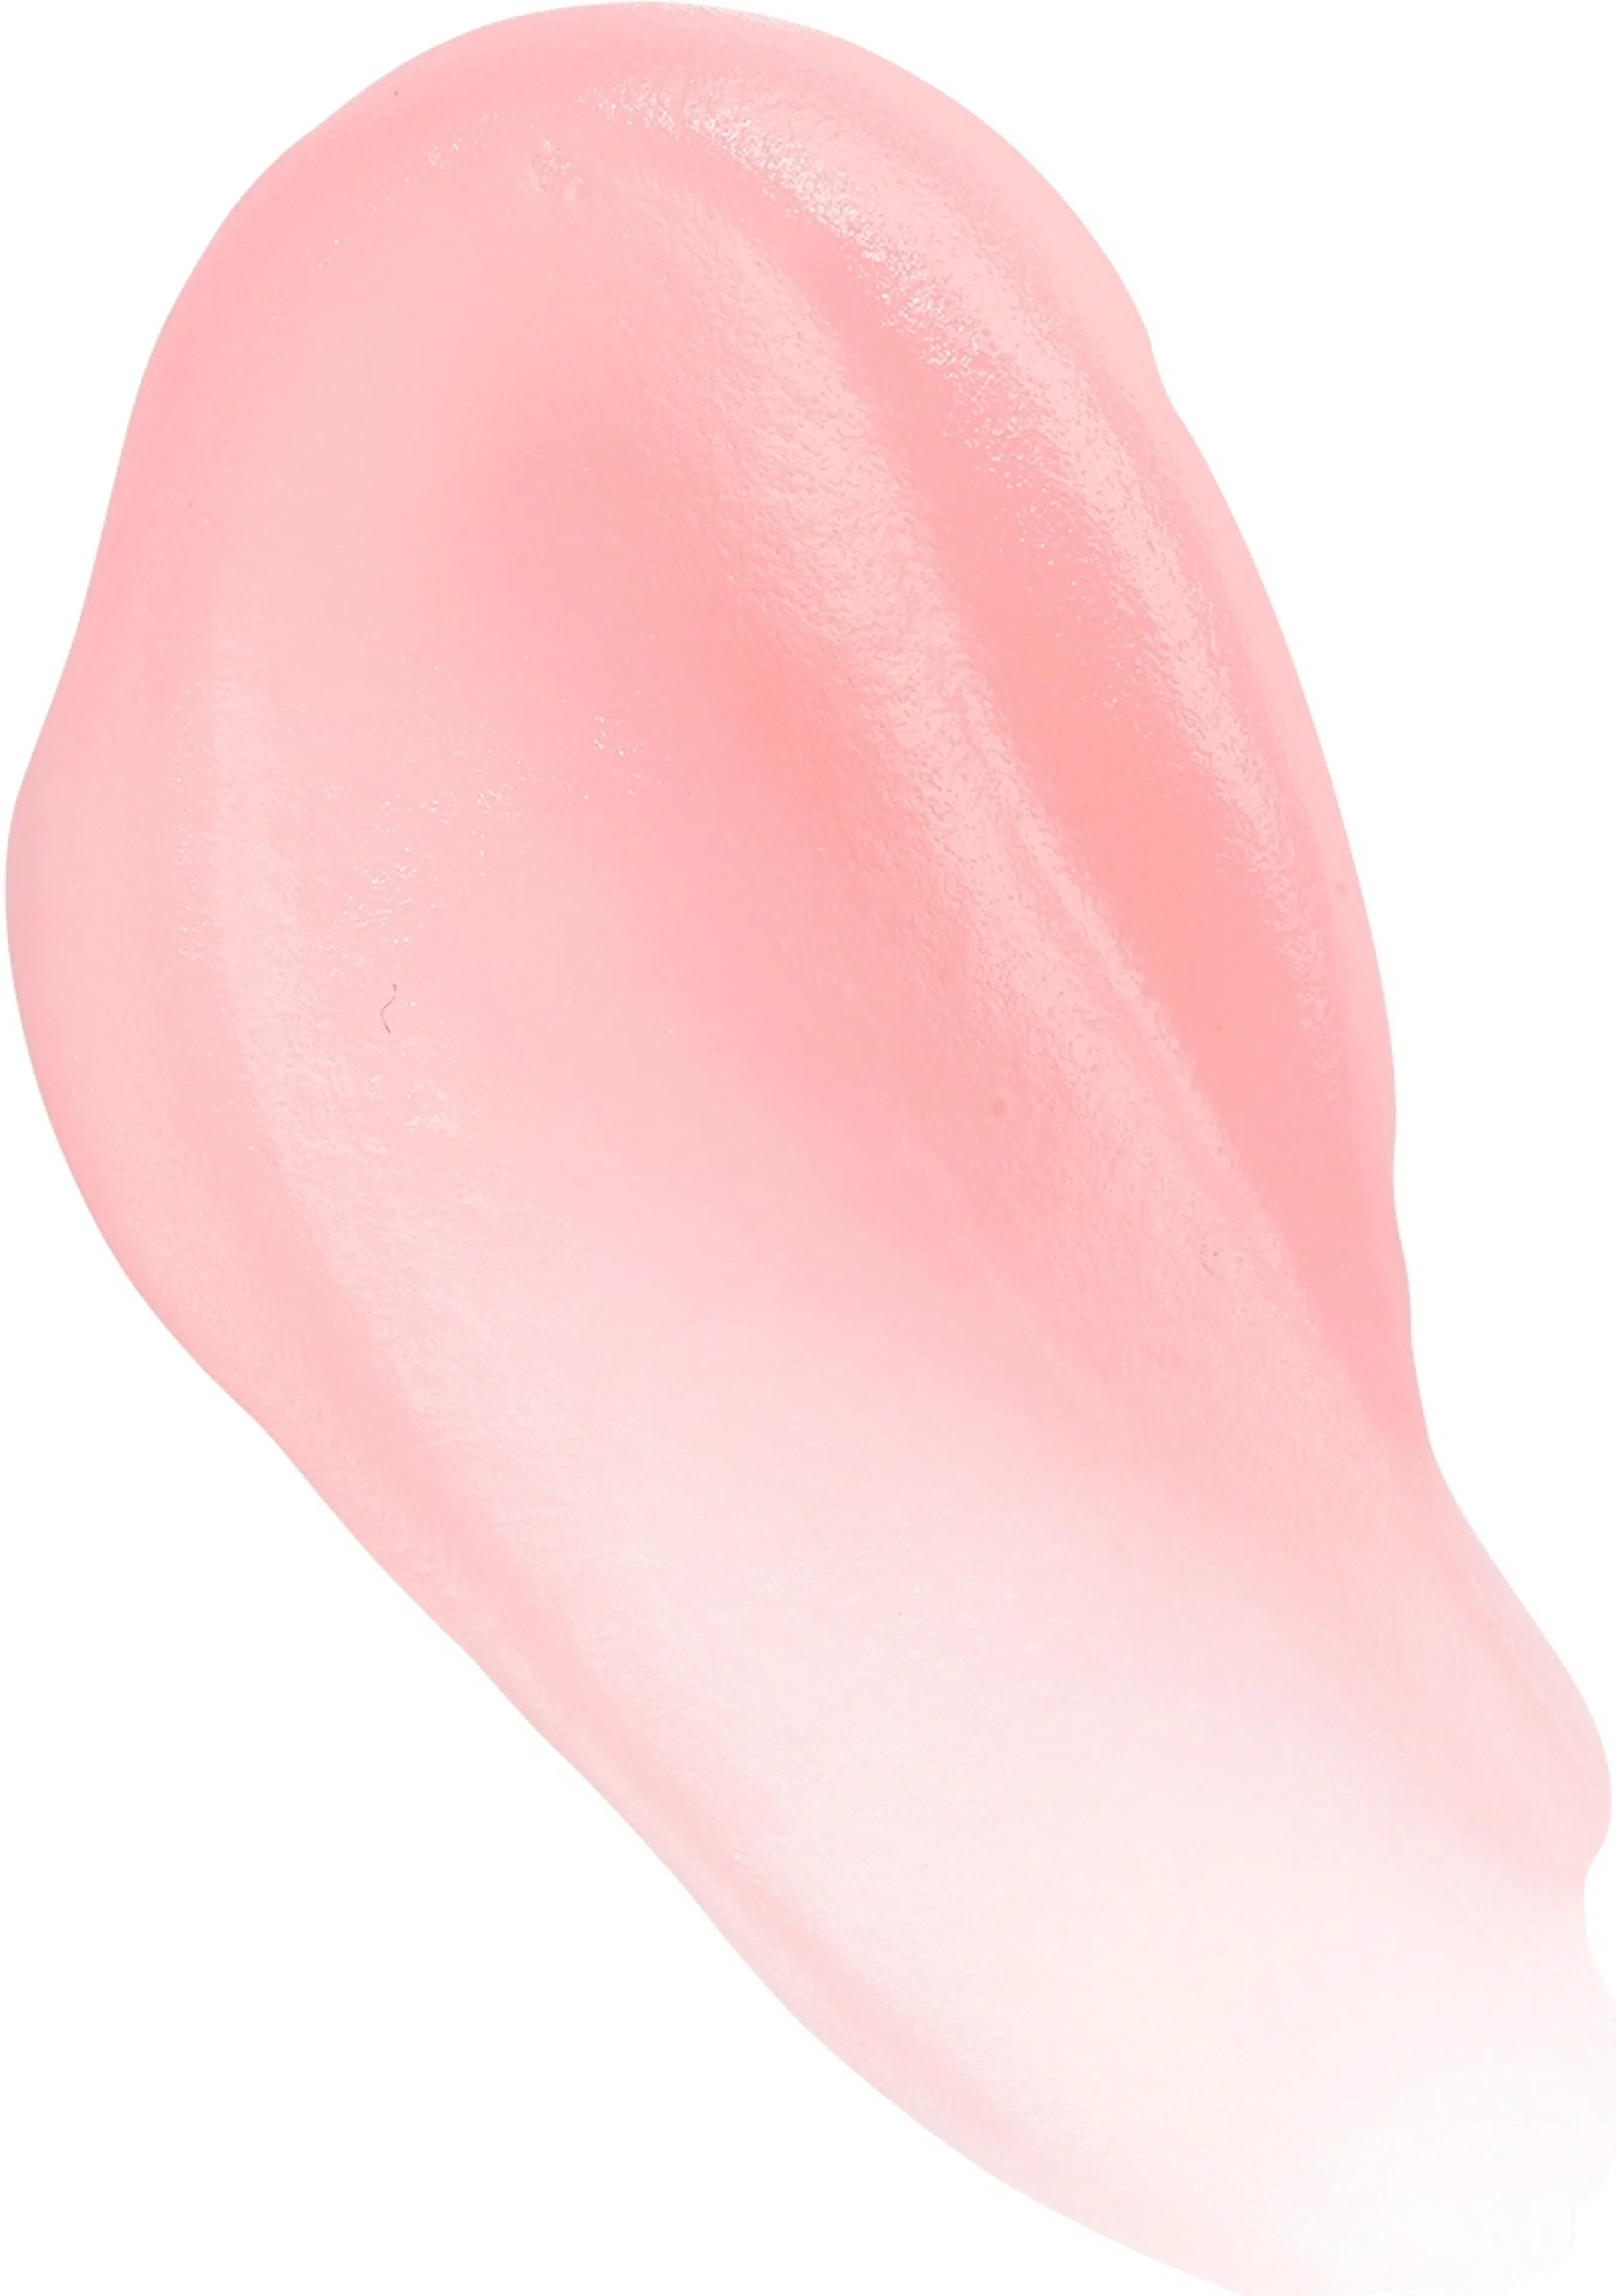 Lancôme Rose Sorbet Cryo-Mask kasvonaamio 50 ml